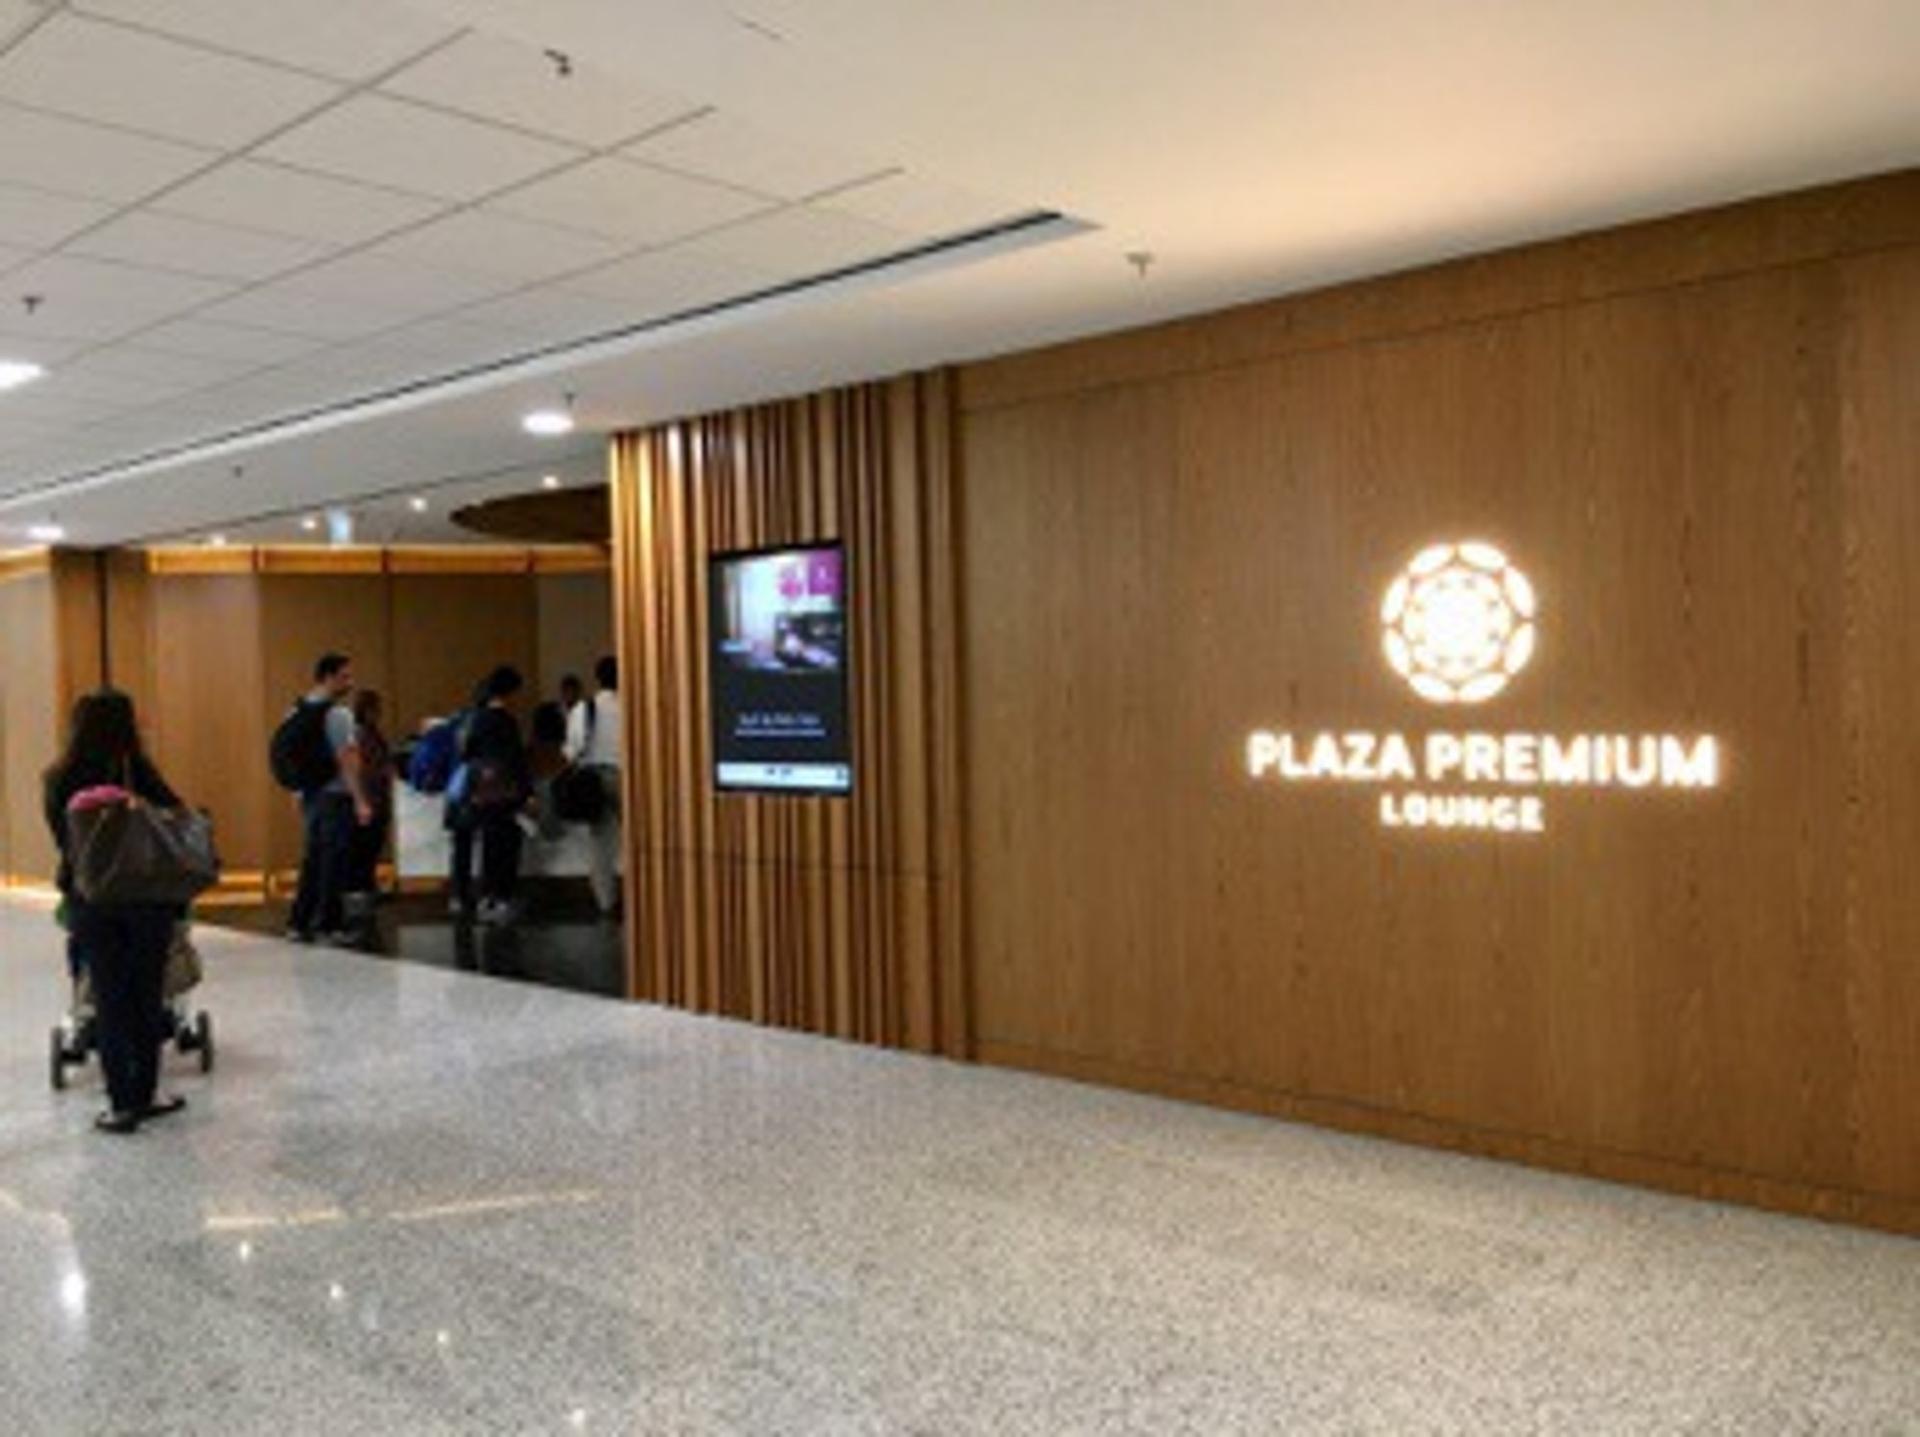 Plaza Premium Lounge (Domestic) image 10 of 38